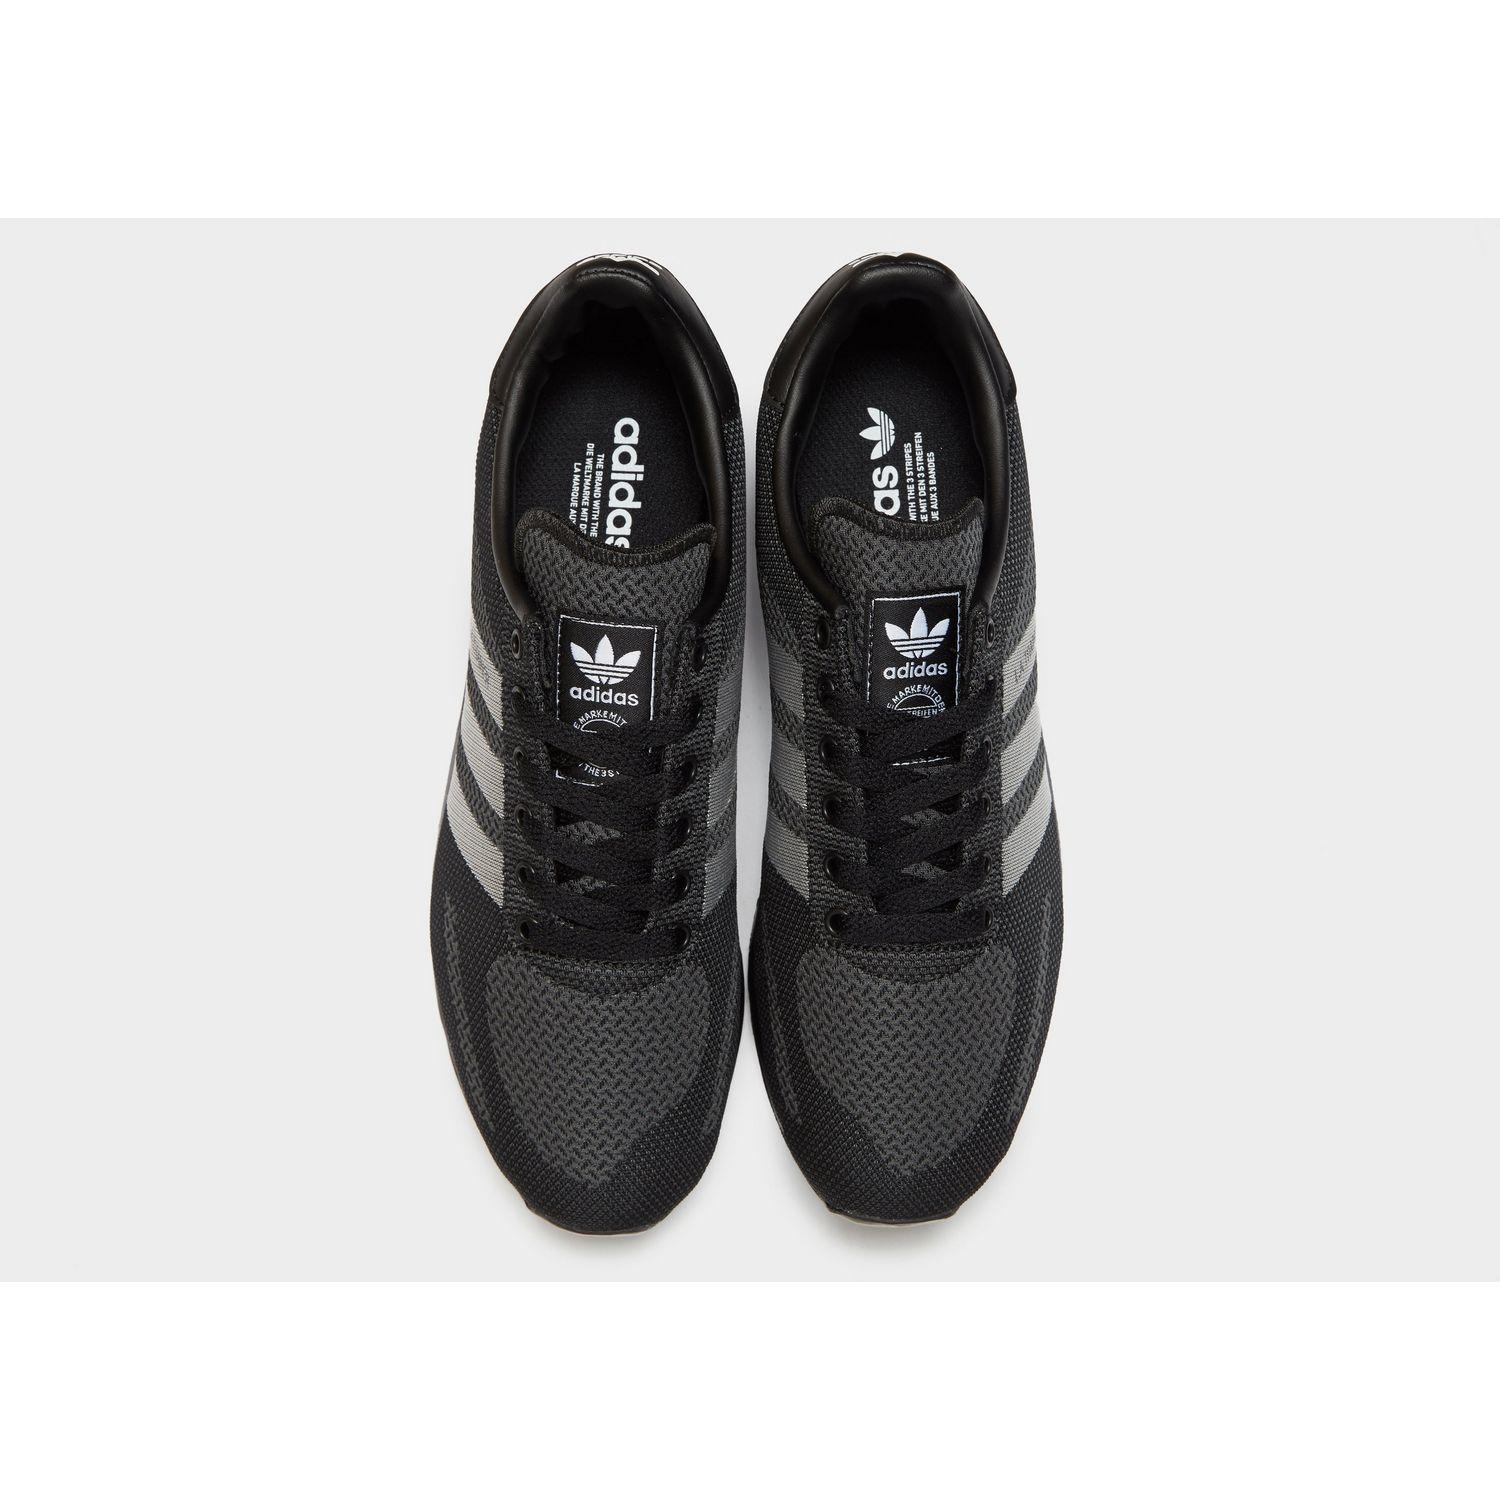 adidas Originals Synthetic La Trainer Weave in Black/Grey (Black) for Men -  Lyst